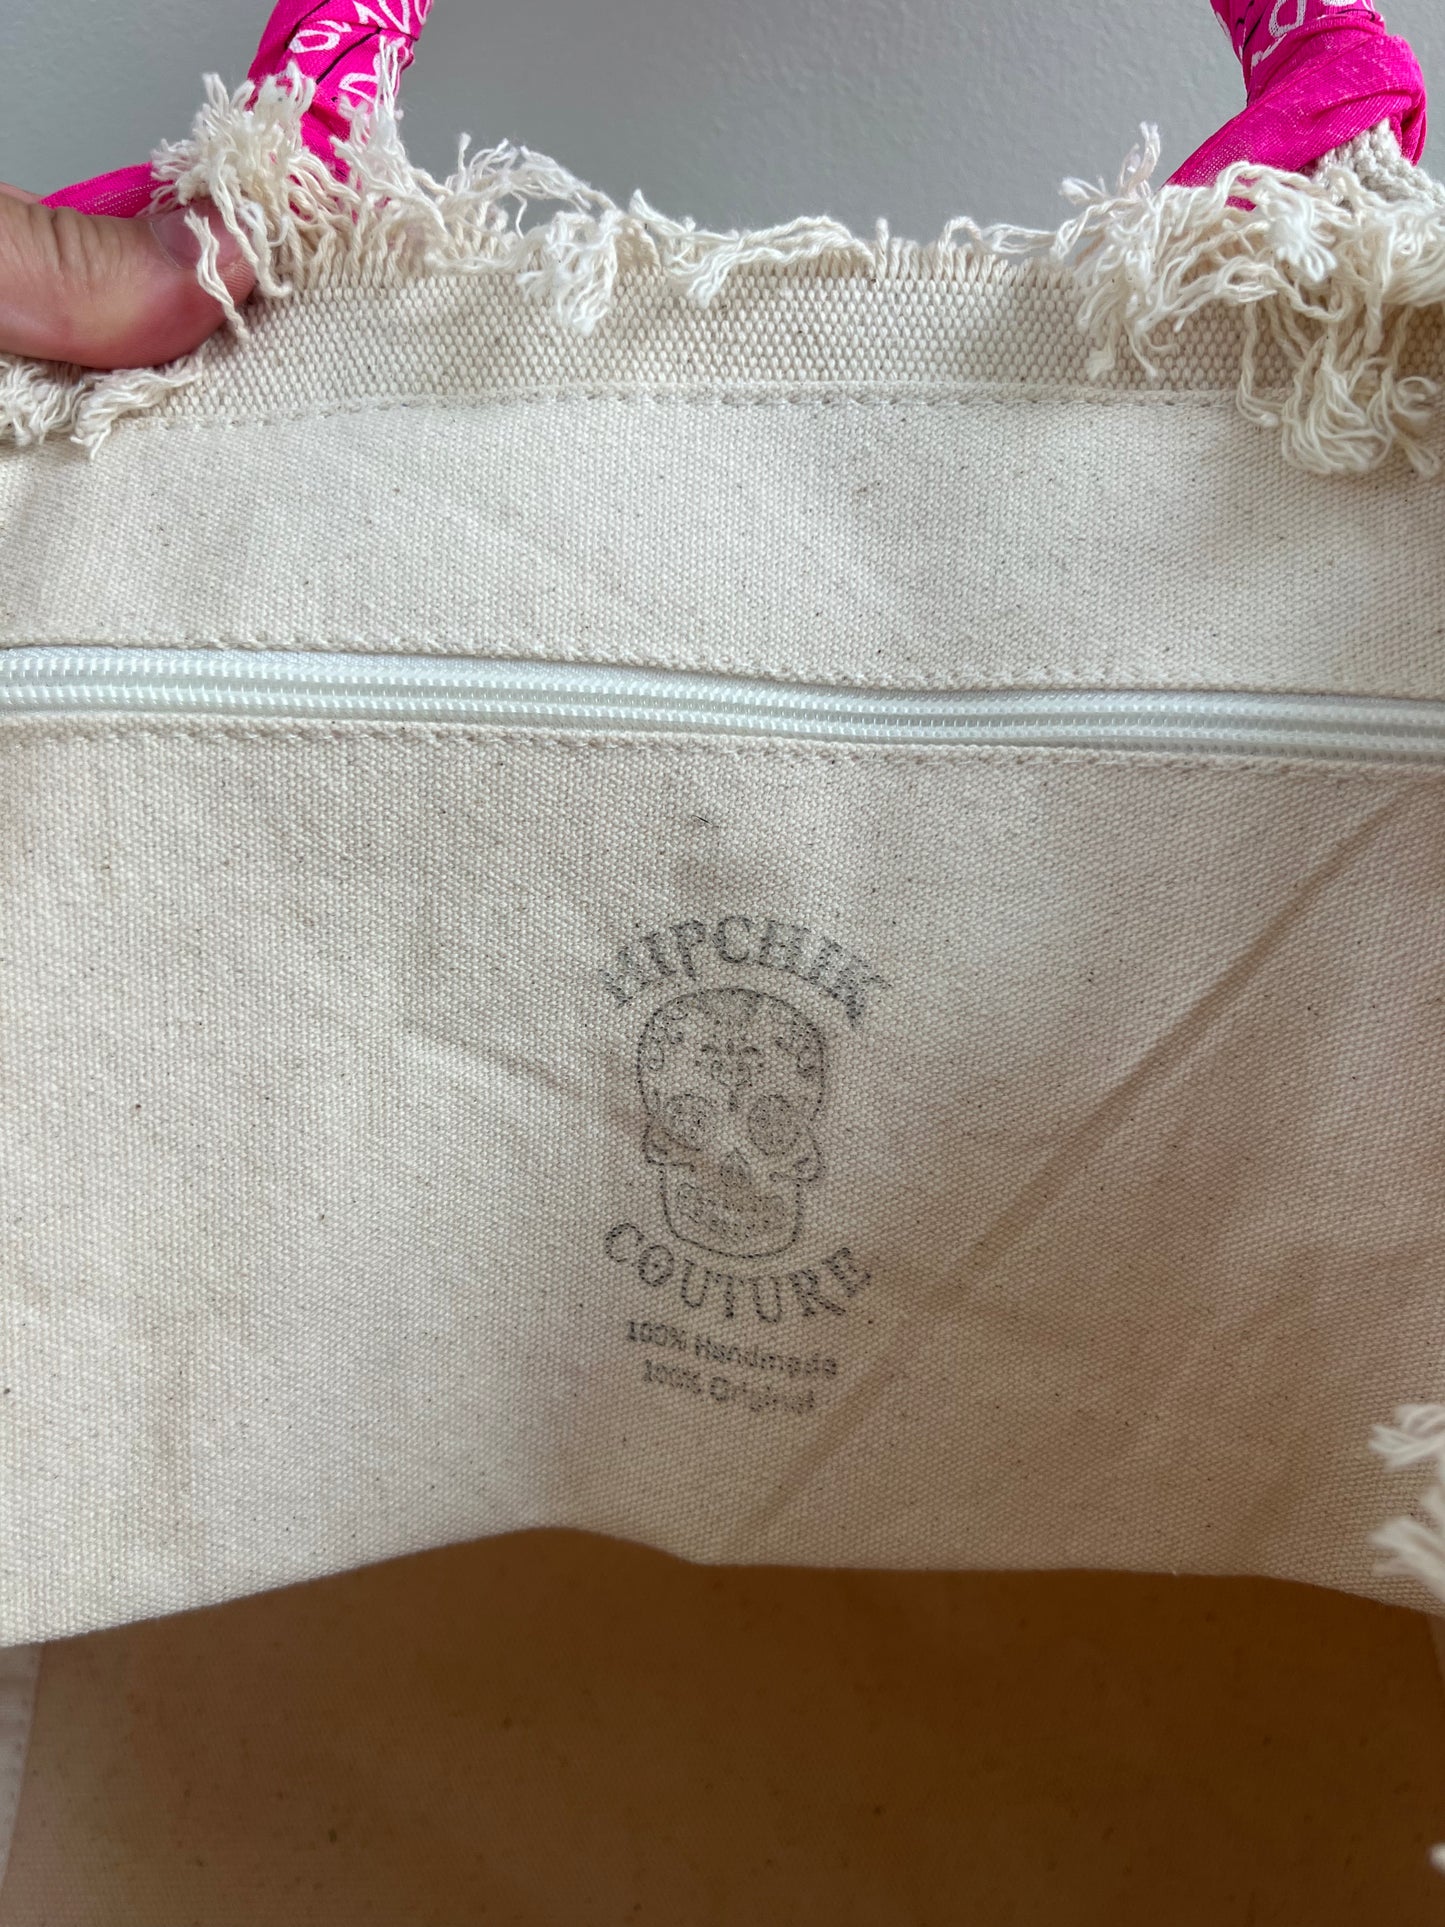 Hipchik Couture Canvas Bag